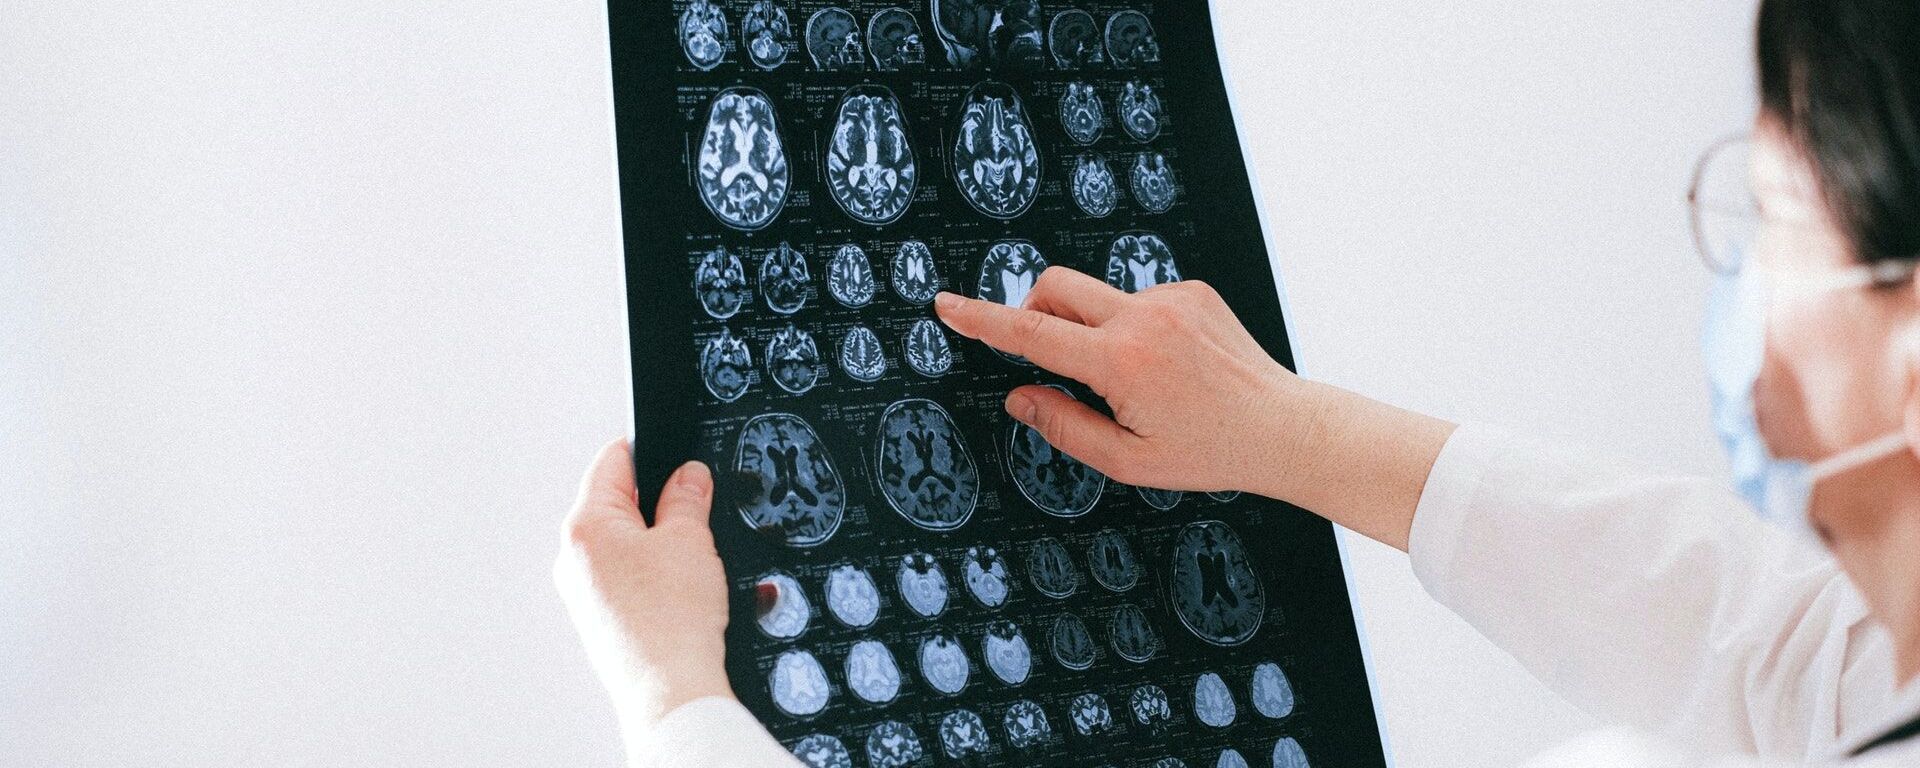 Врач изучает рентген снимок мозга пациента. Иллюстративное фото - Sputnik Кыргызстан, 1920, 23.02.2022